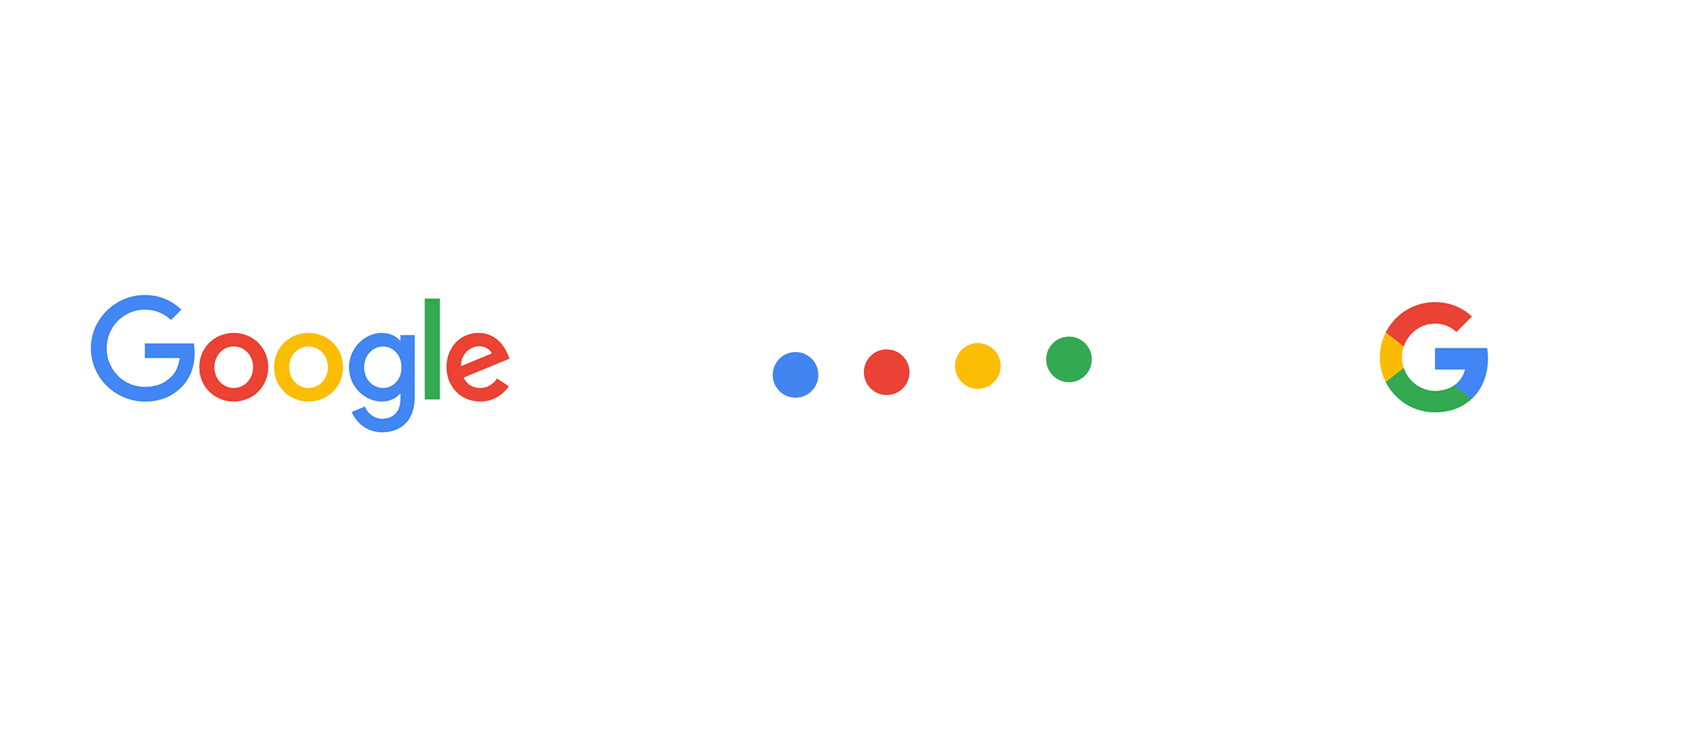 Small Google Logo - Evolving the Google Identity - Library - Google Design